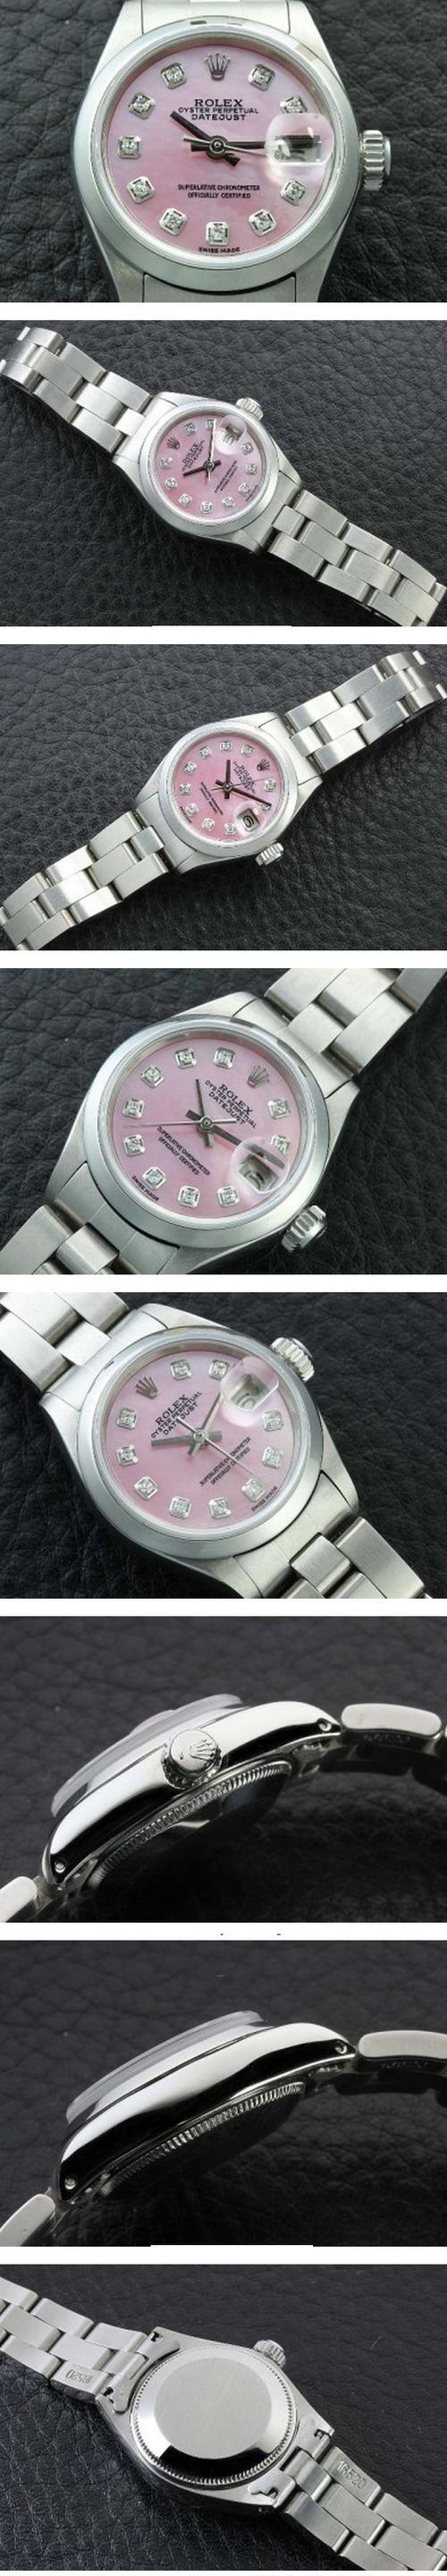 buy ladies diamond pink pearl rolex watches watch online eswift.us